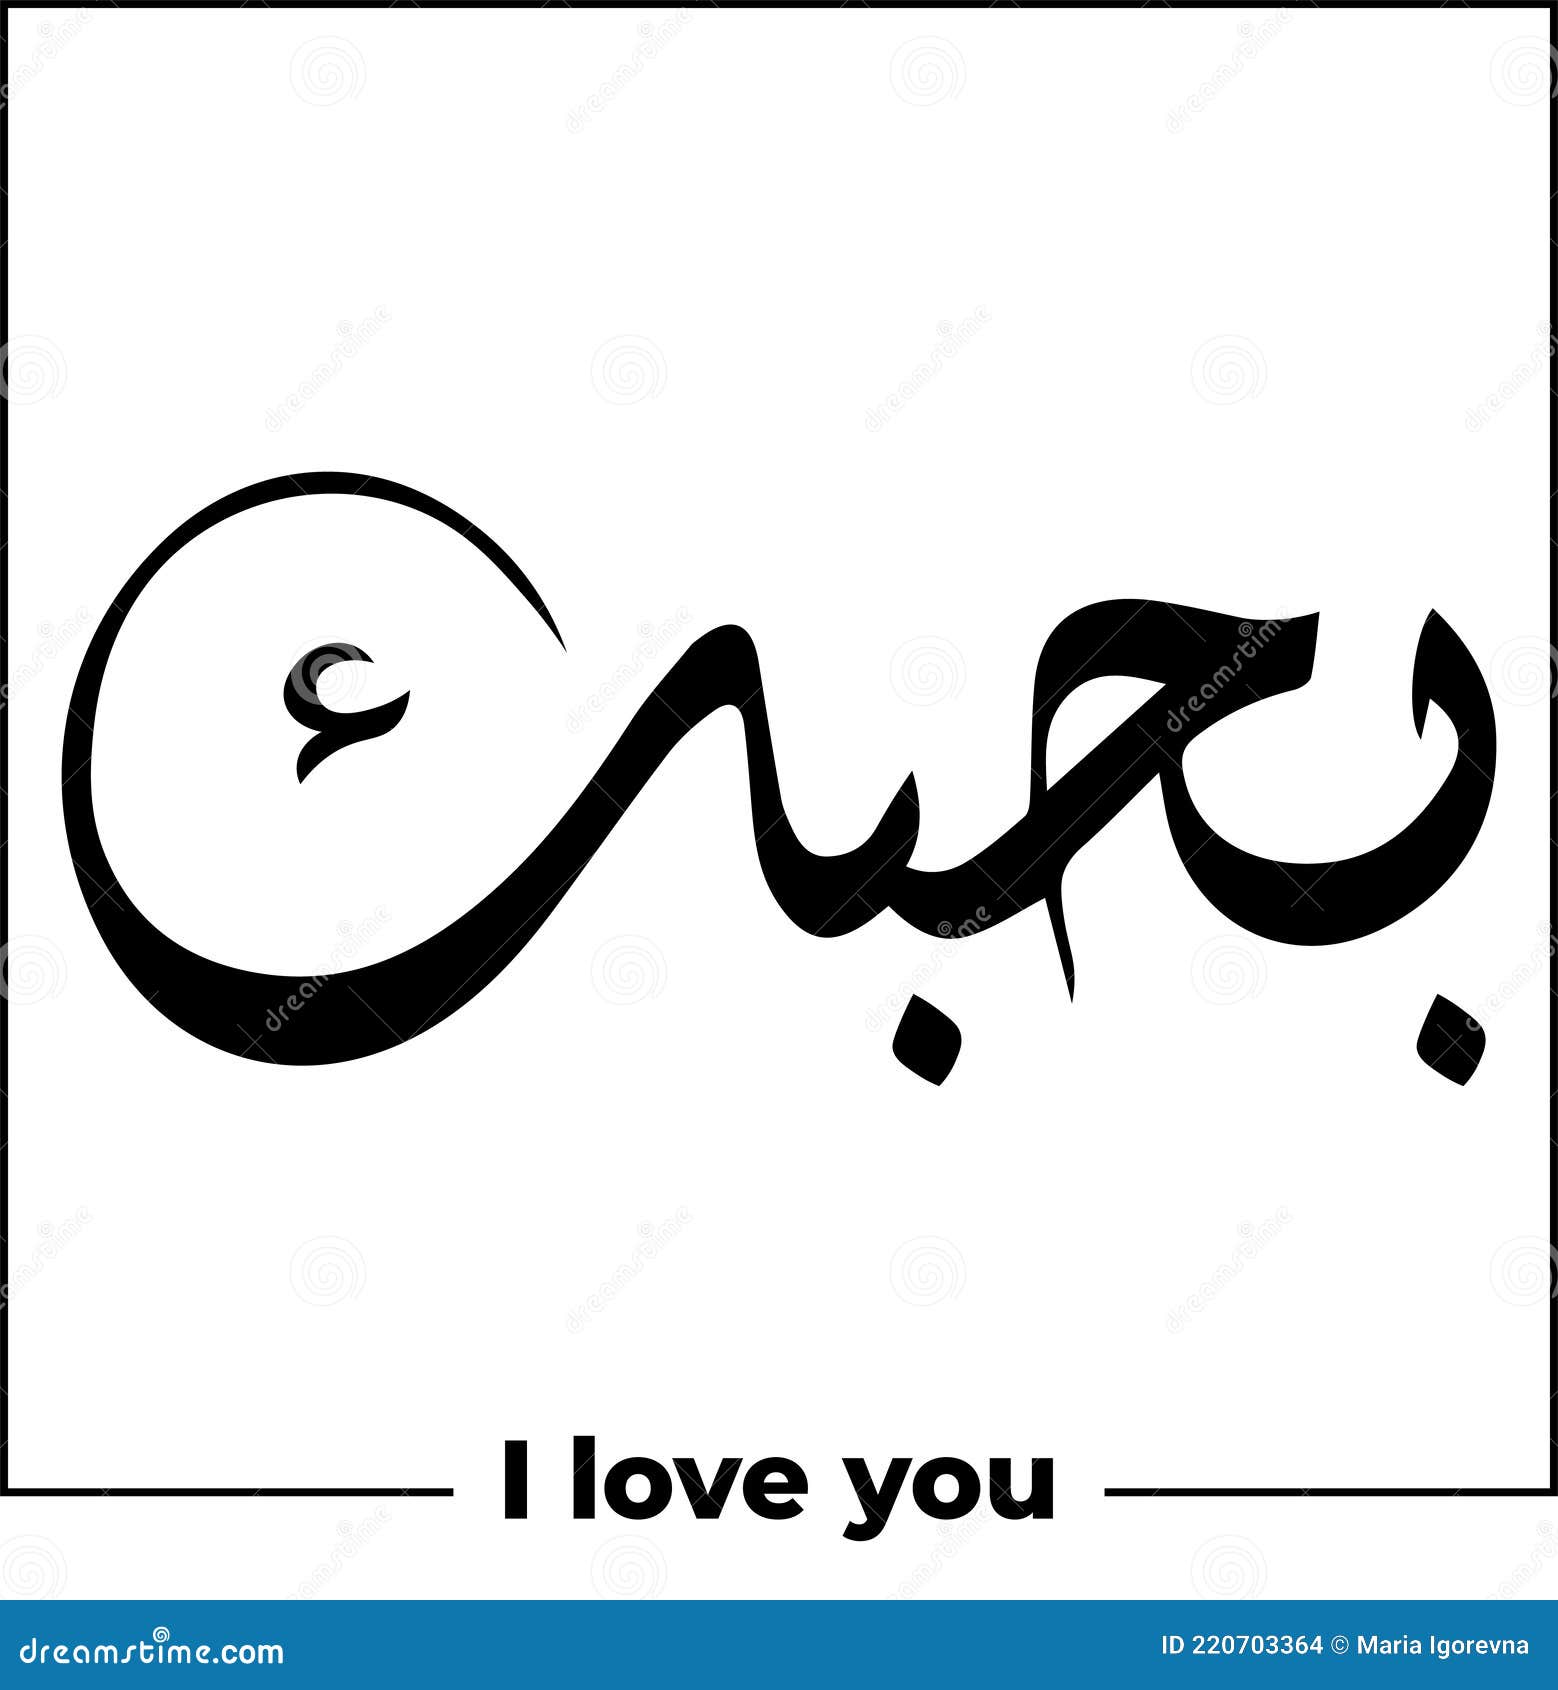 Arabic Calligraphy Word Meaning I Love You Tattoo Idea Design Hand Drawn  Vector Illustration Islamic Stock Vector - Illustration of animal, bahrain:  220703364